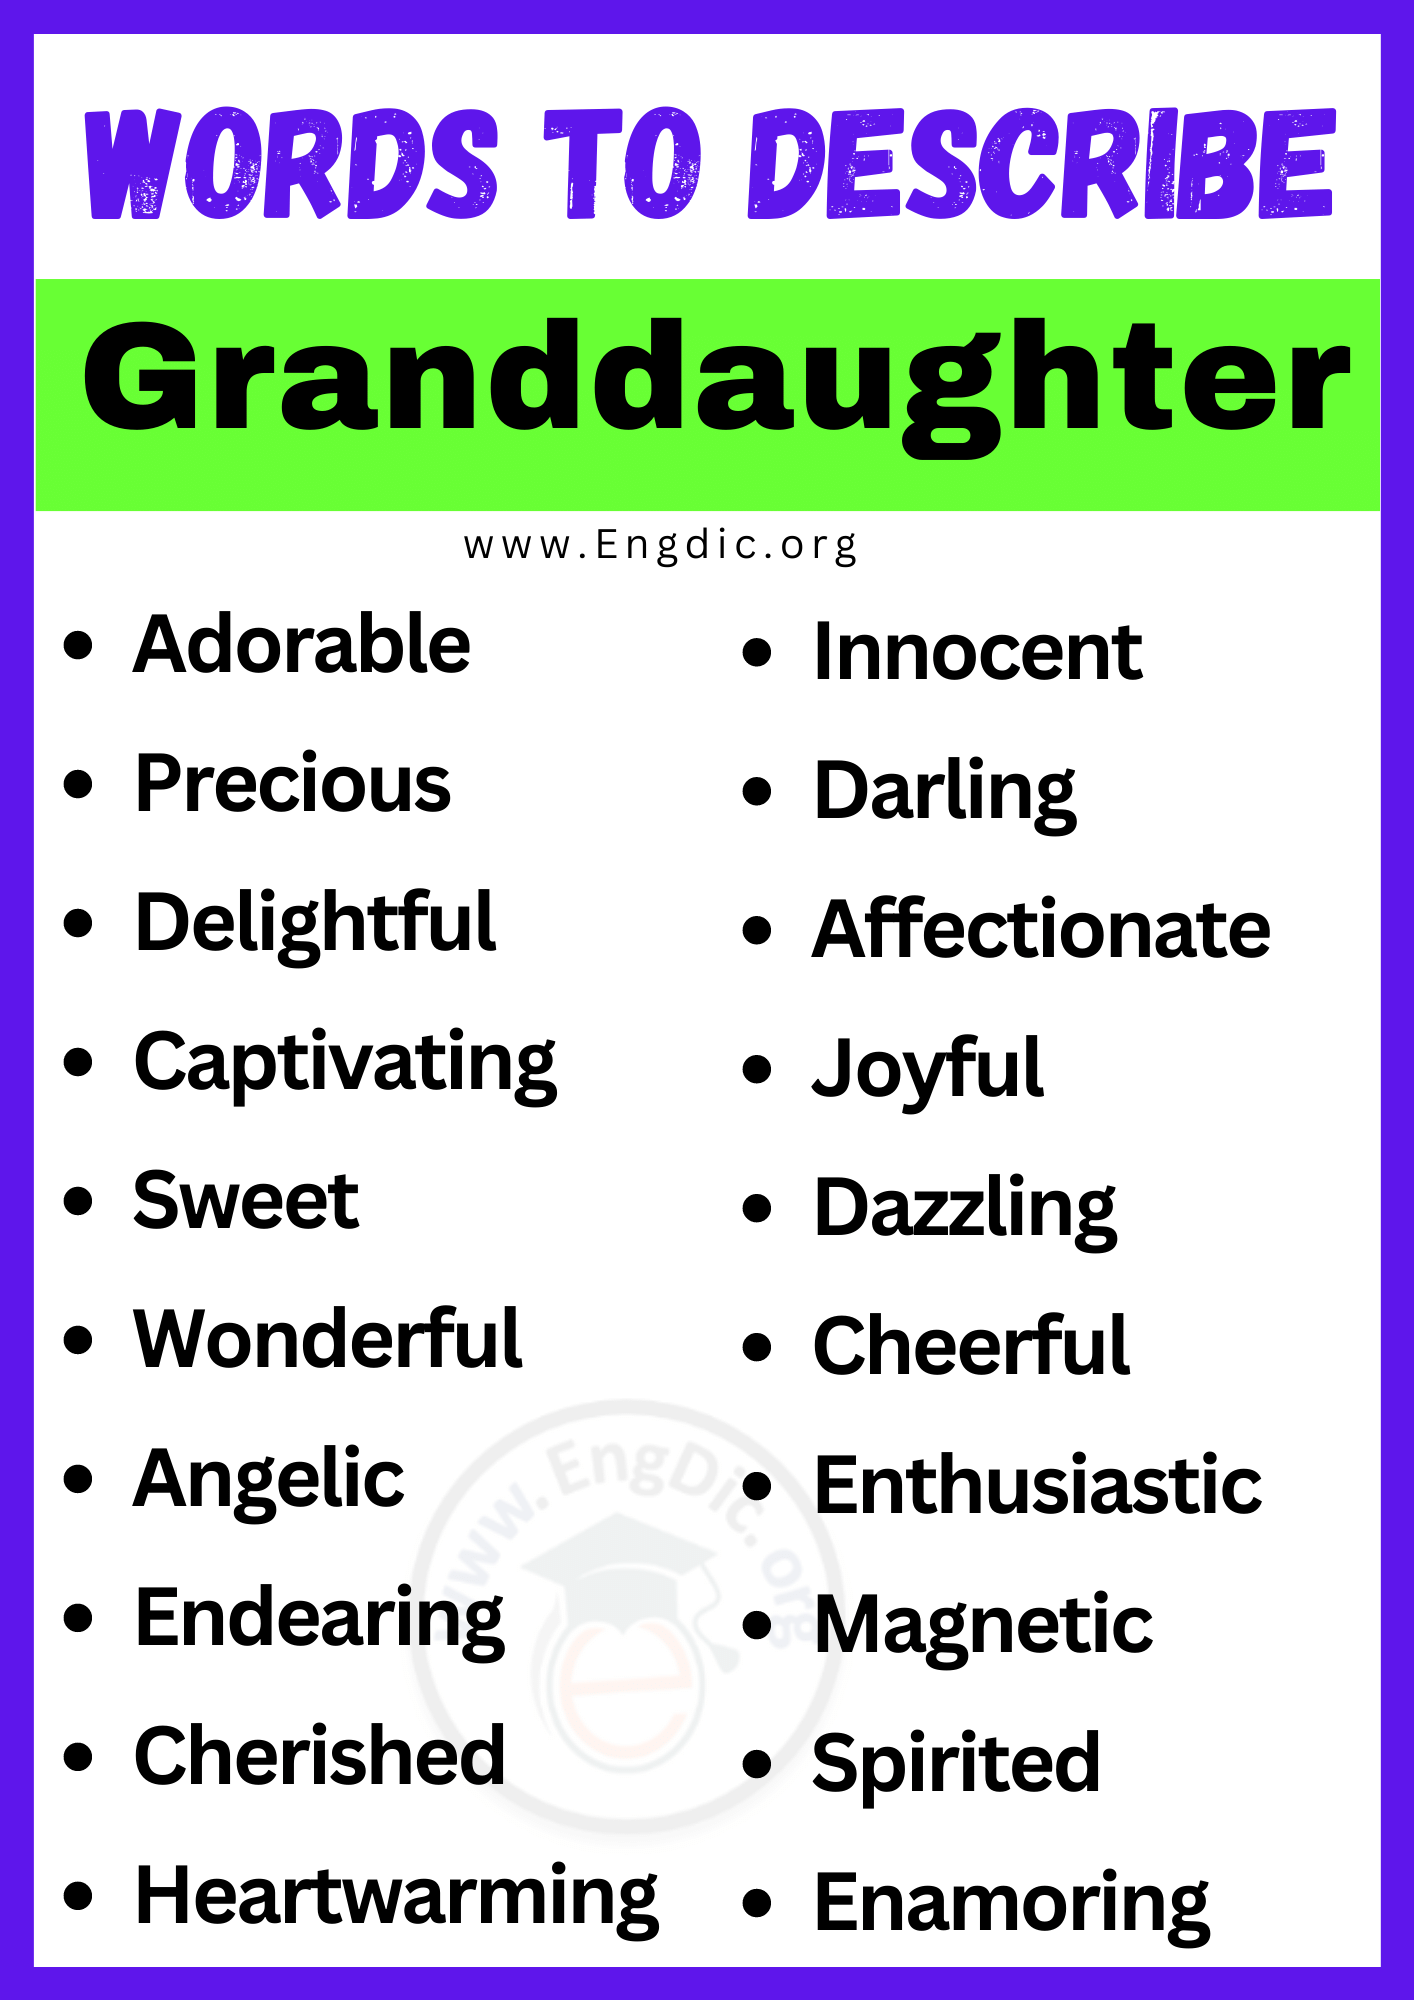 Words to Describe Granddaughter